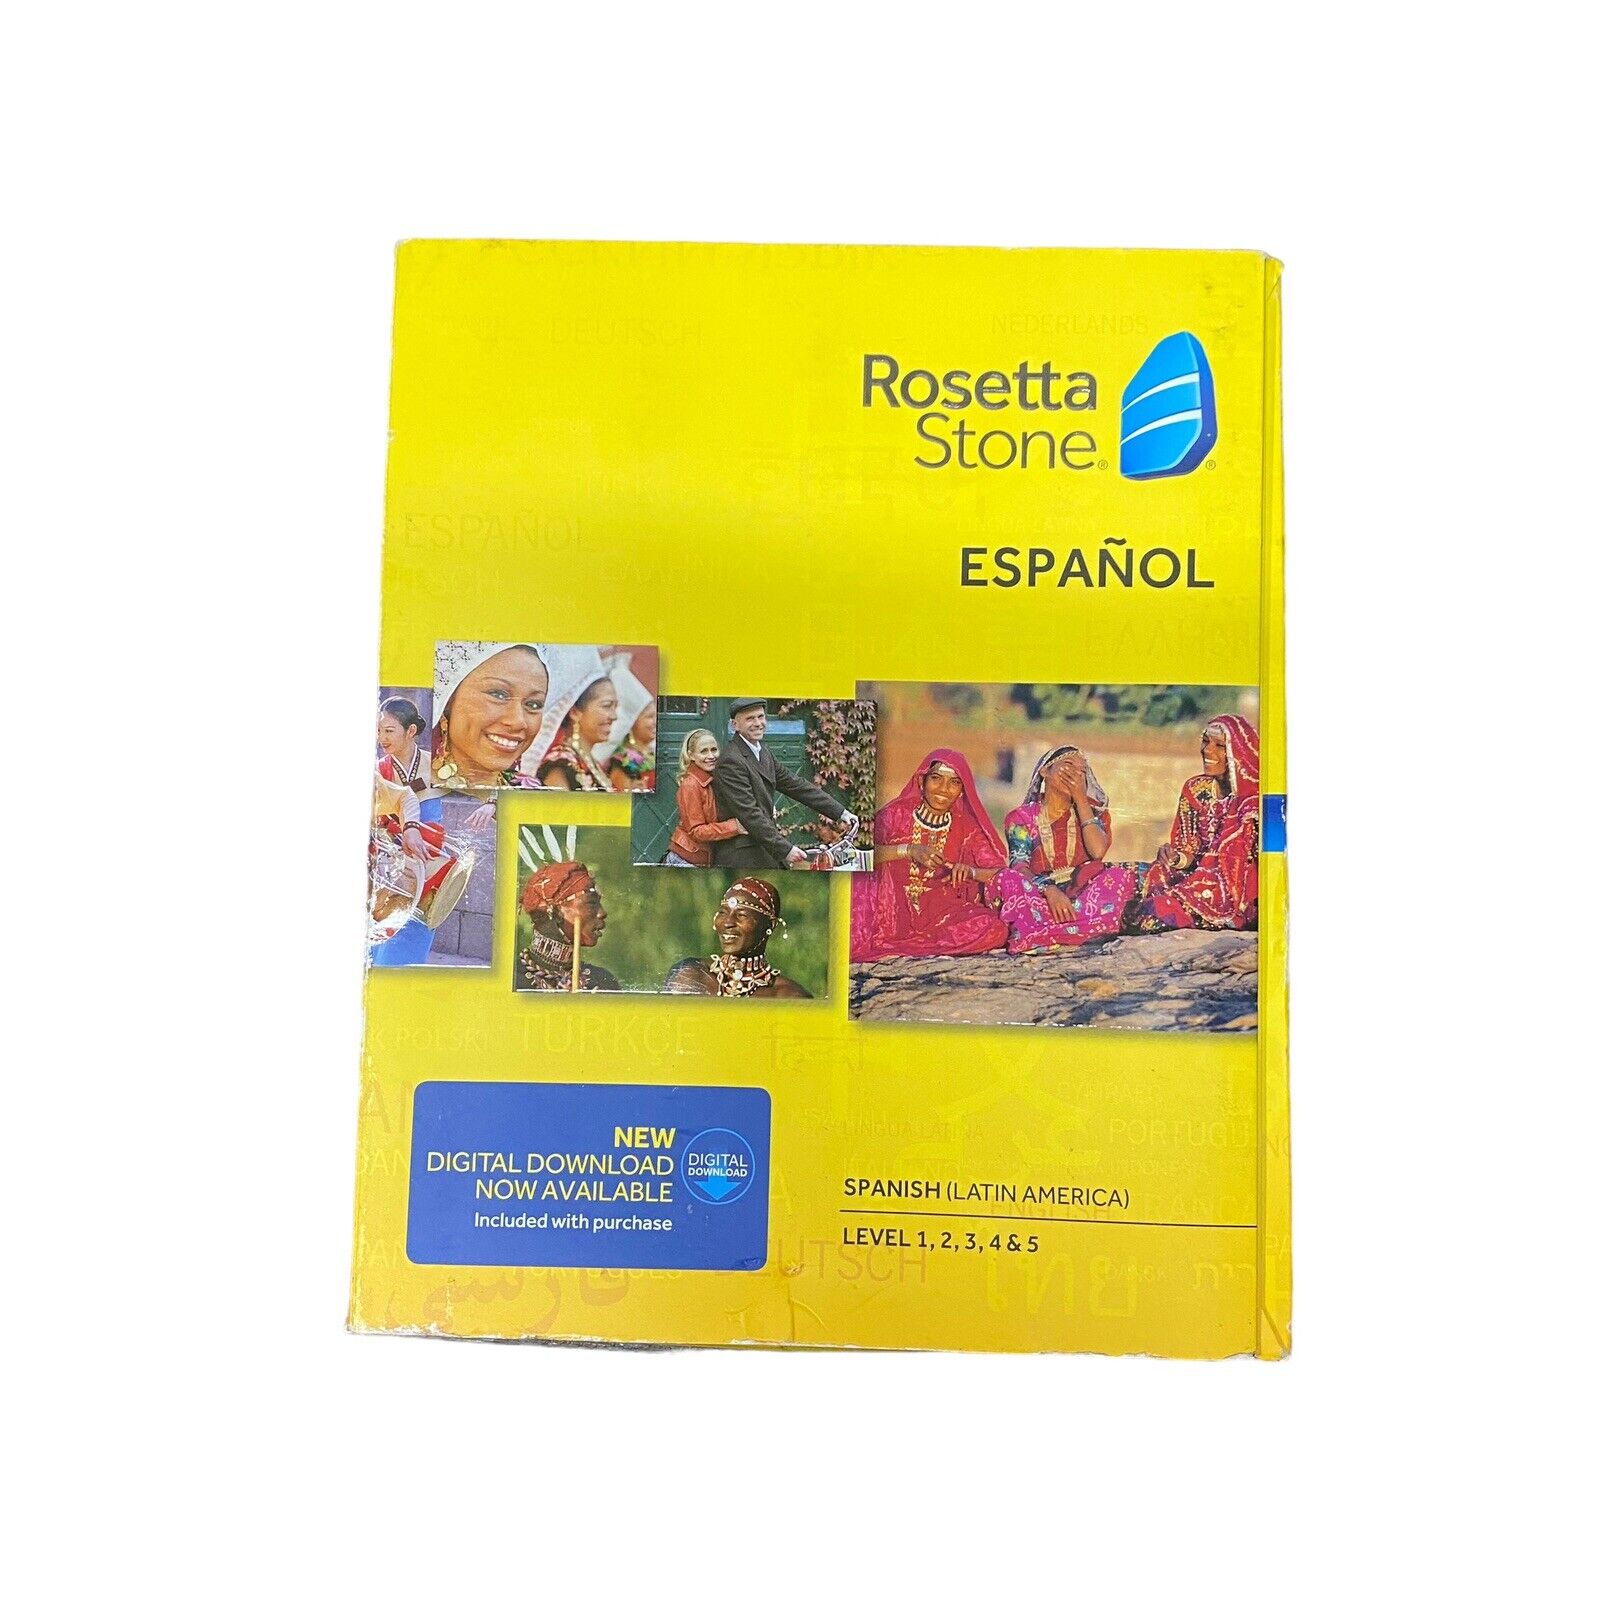 Rosetta Stone Spanish (Latin America) Version 4 Level 1-5 Español Good